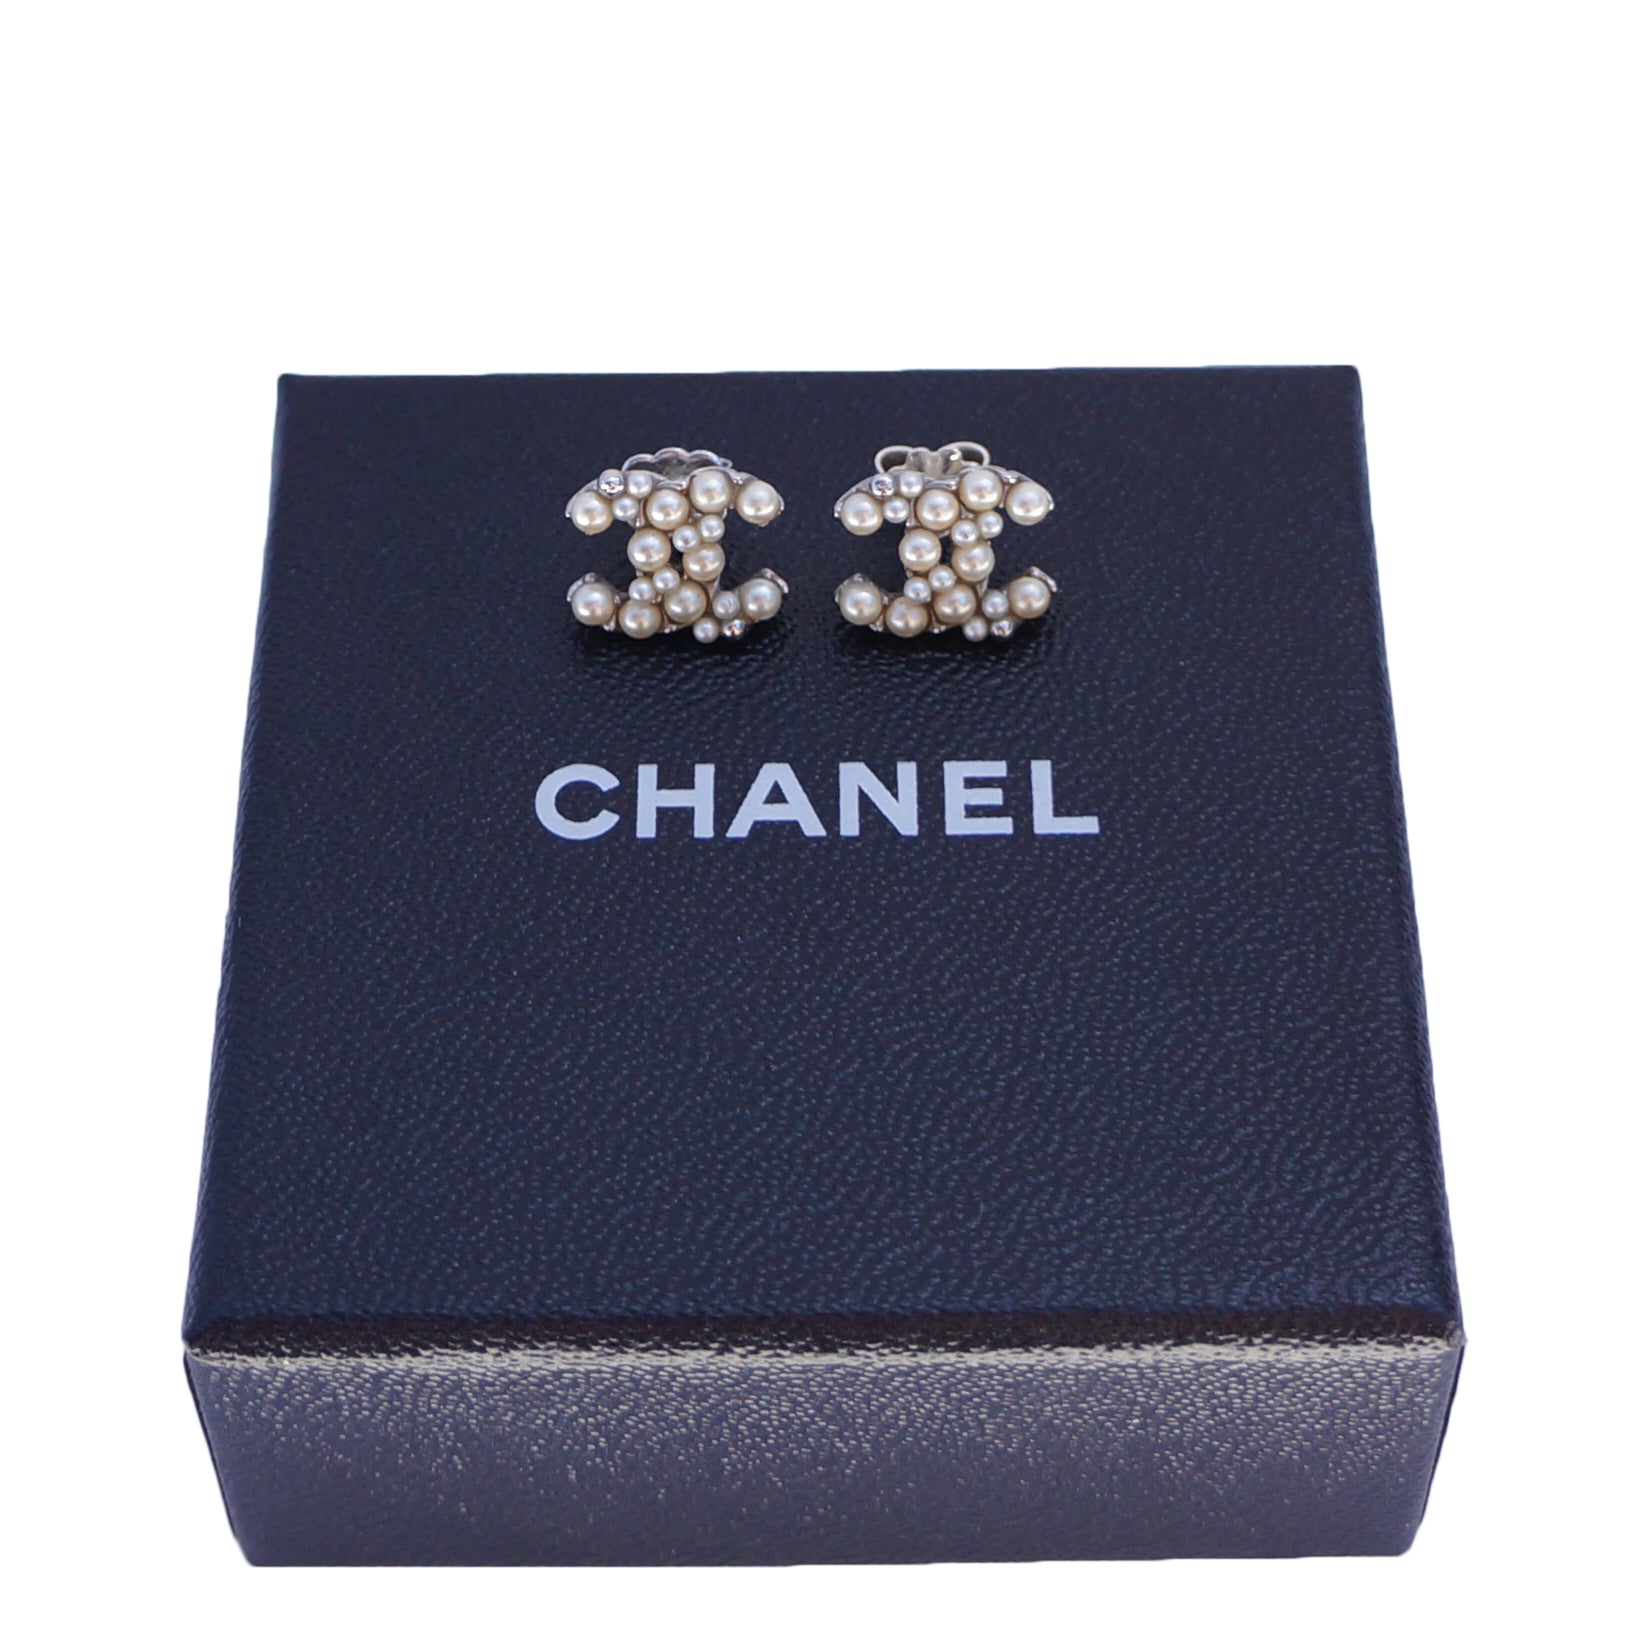 Chanel Earrings 21 - 16 For Sale on 1stDibs  chanel earrings 2021, chanel  padlock earrings, chanel cc stud earrings